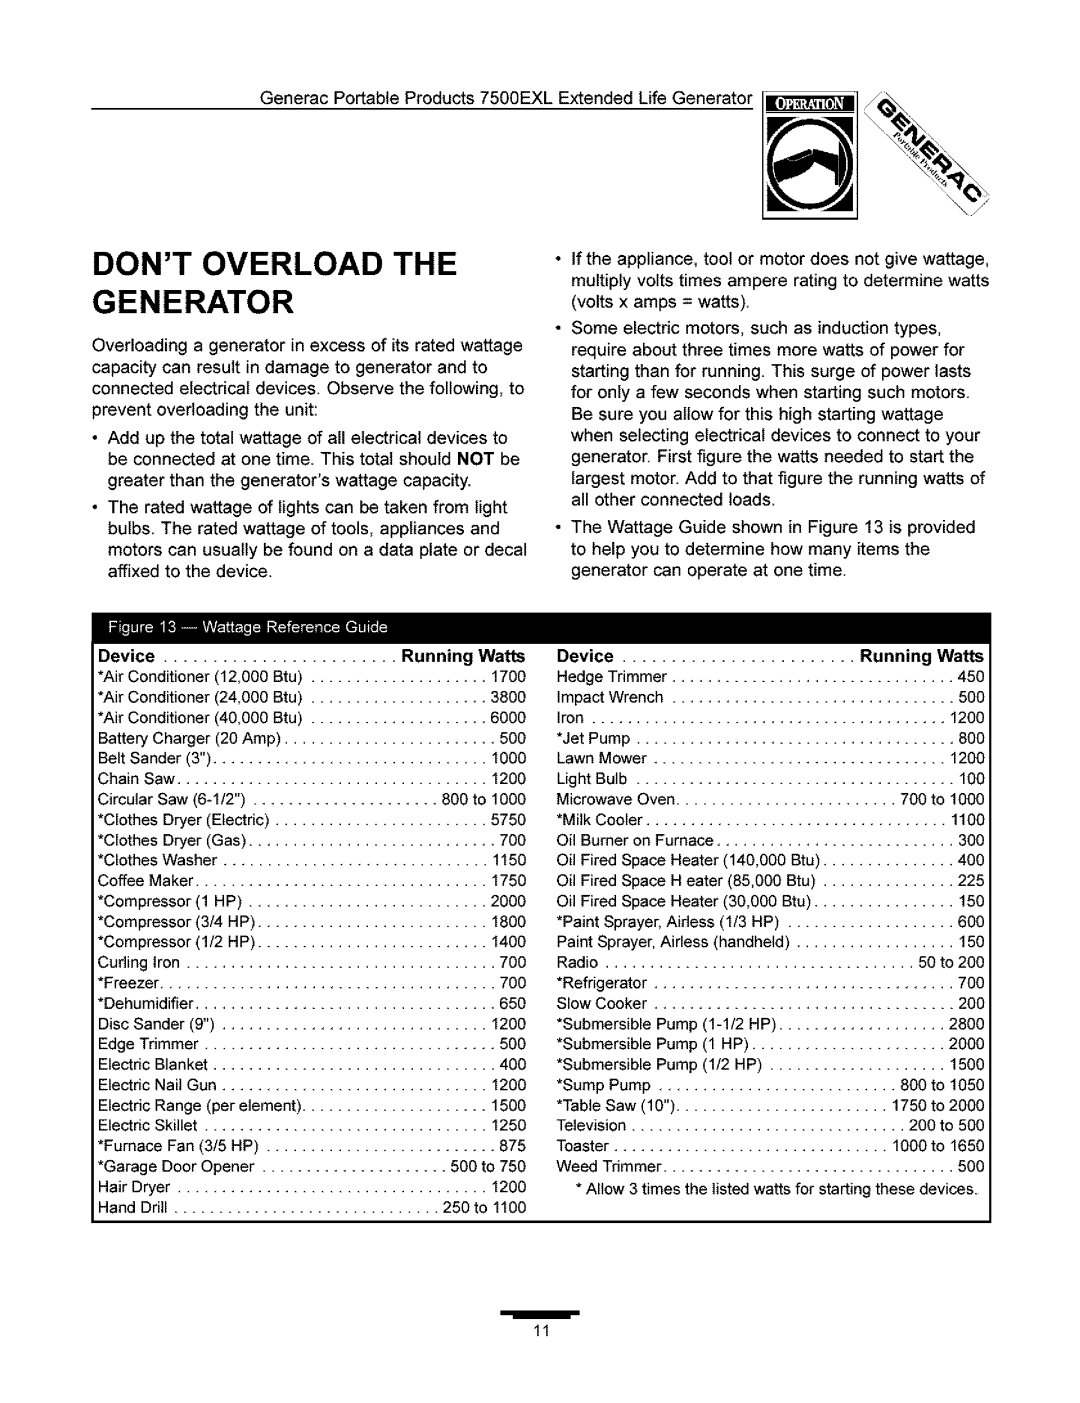 Generac 7500 owner manual Dont Overload The Generator 